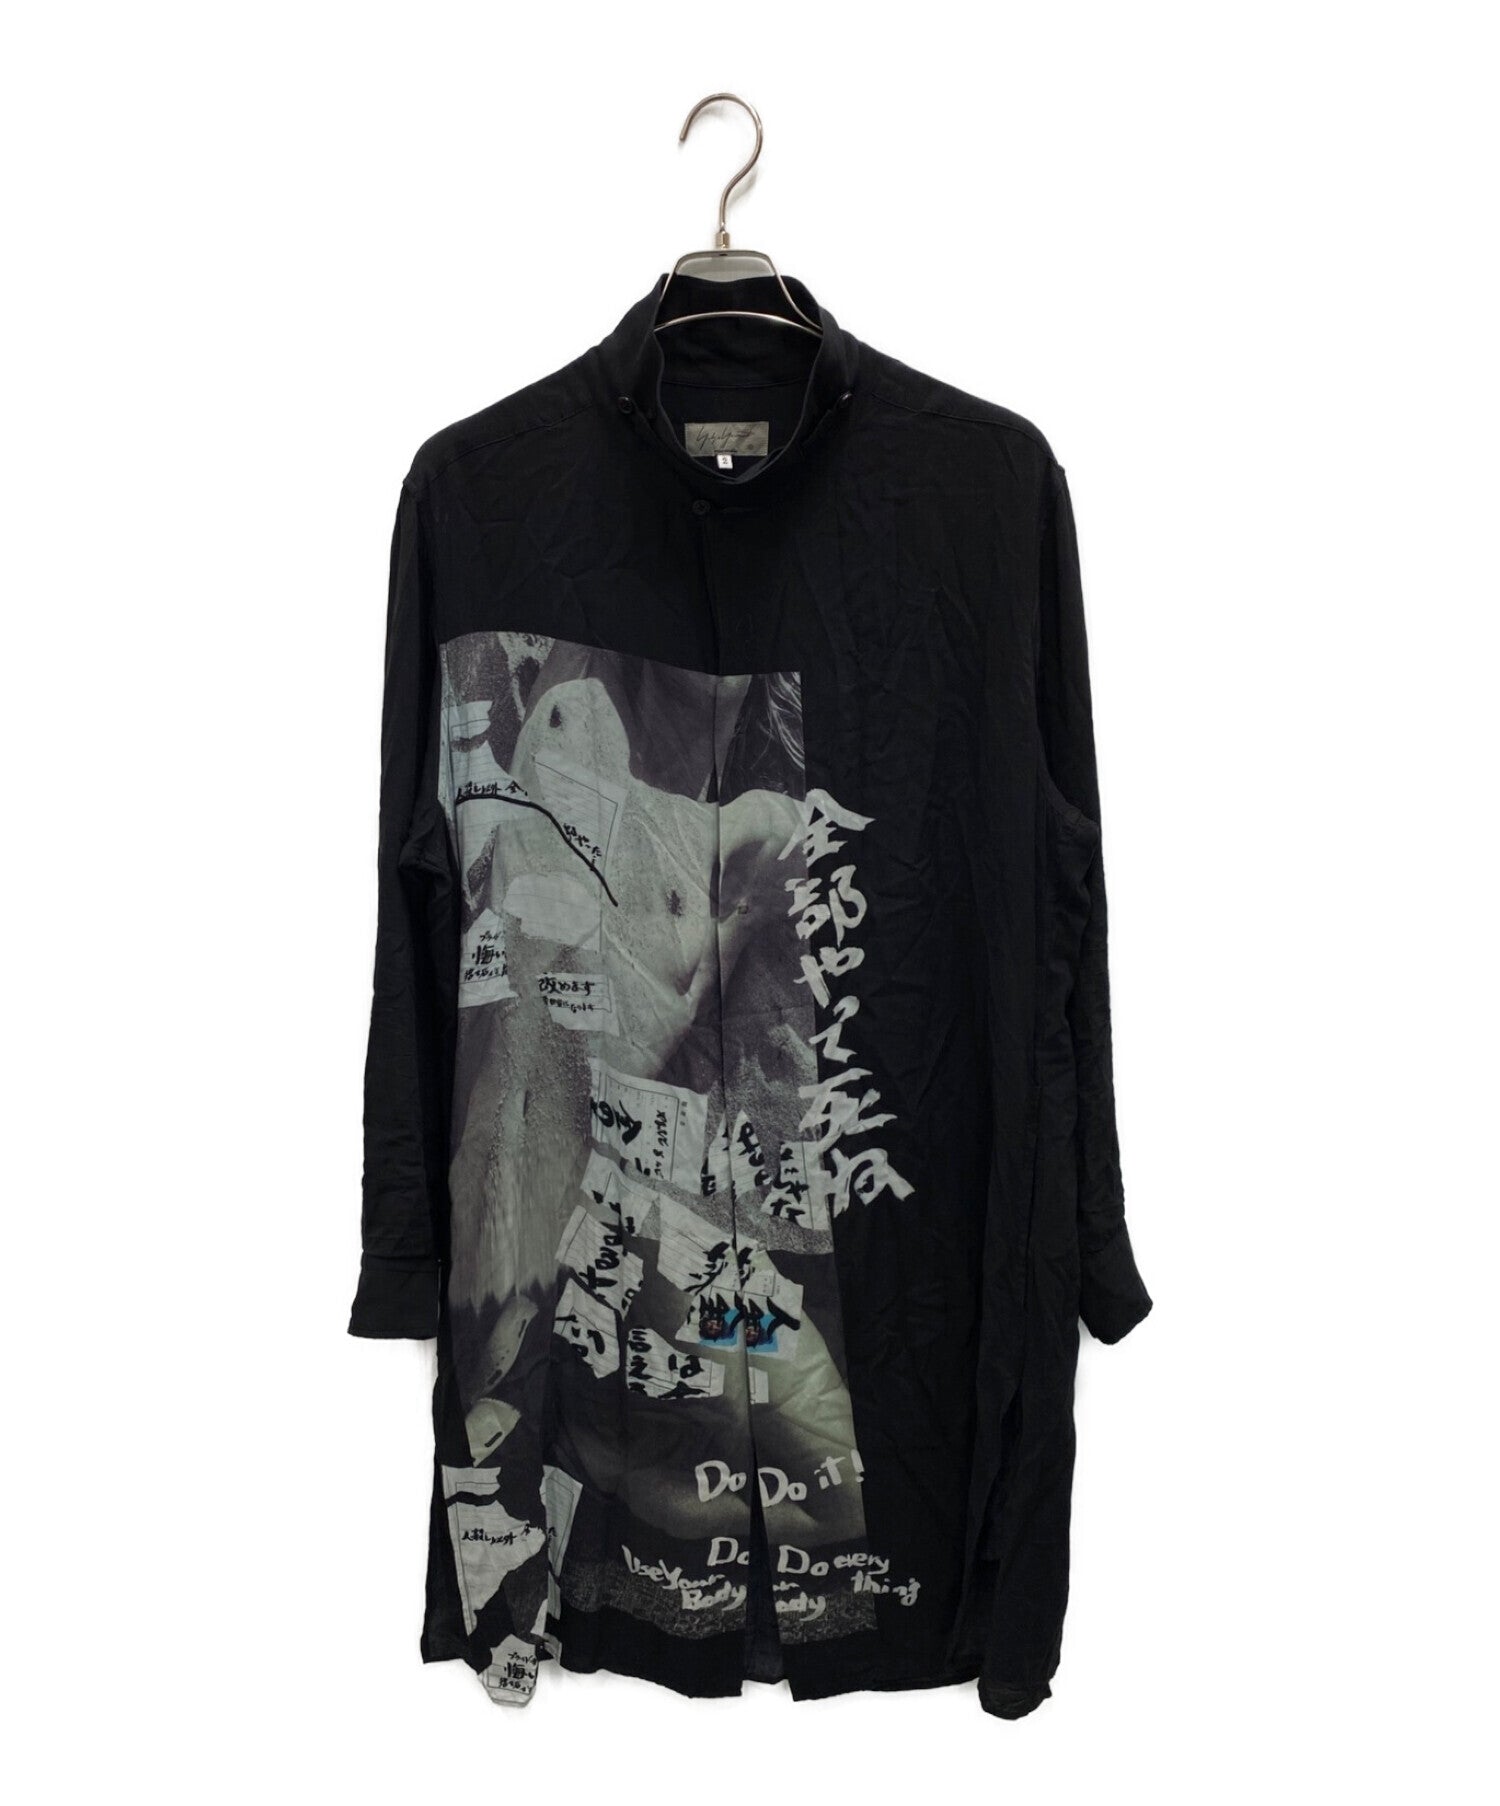 Yohji Yamamoto pour homme 19SS shirt HH-B40-222